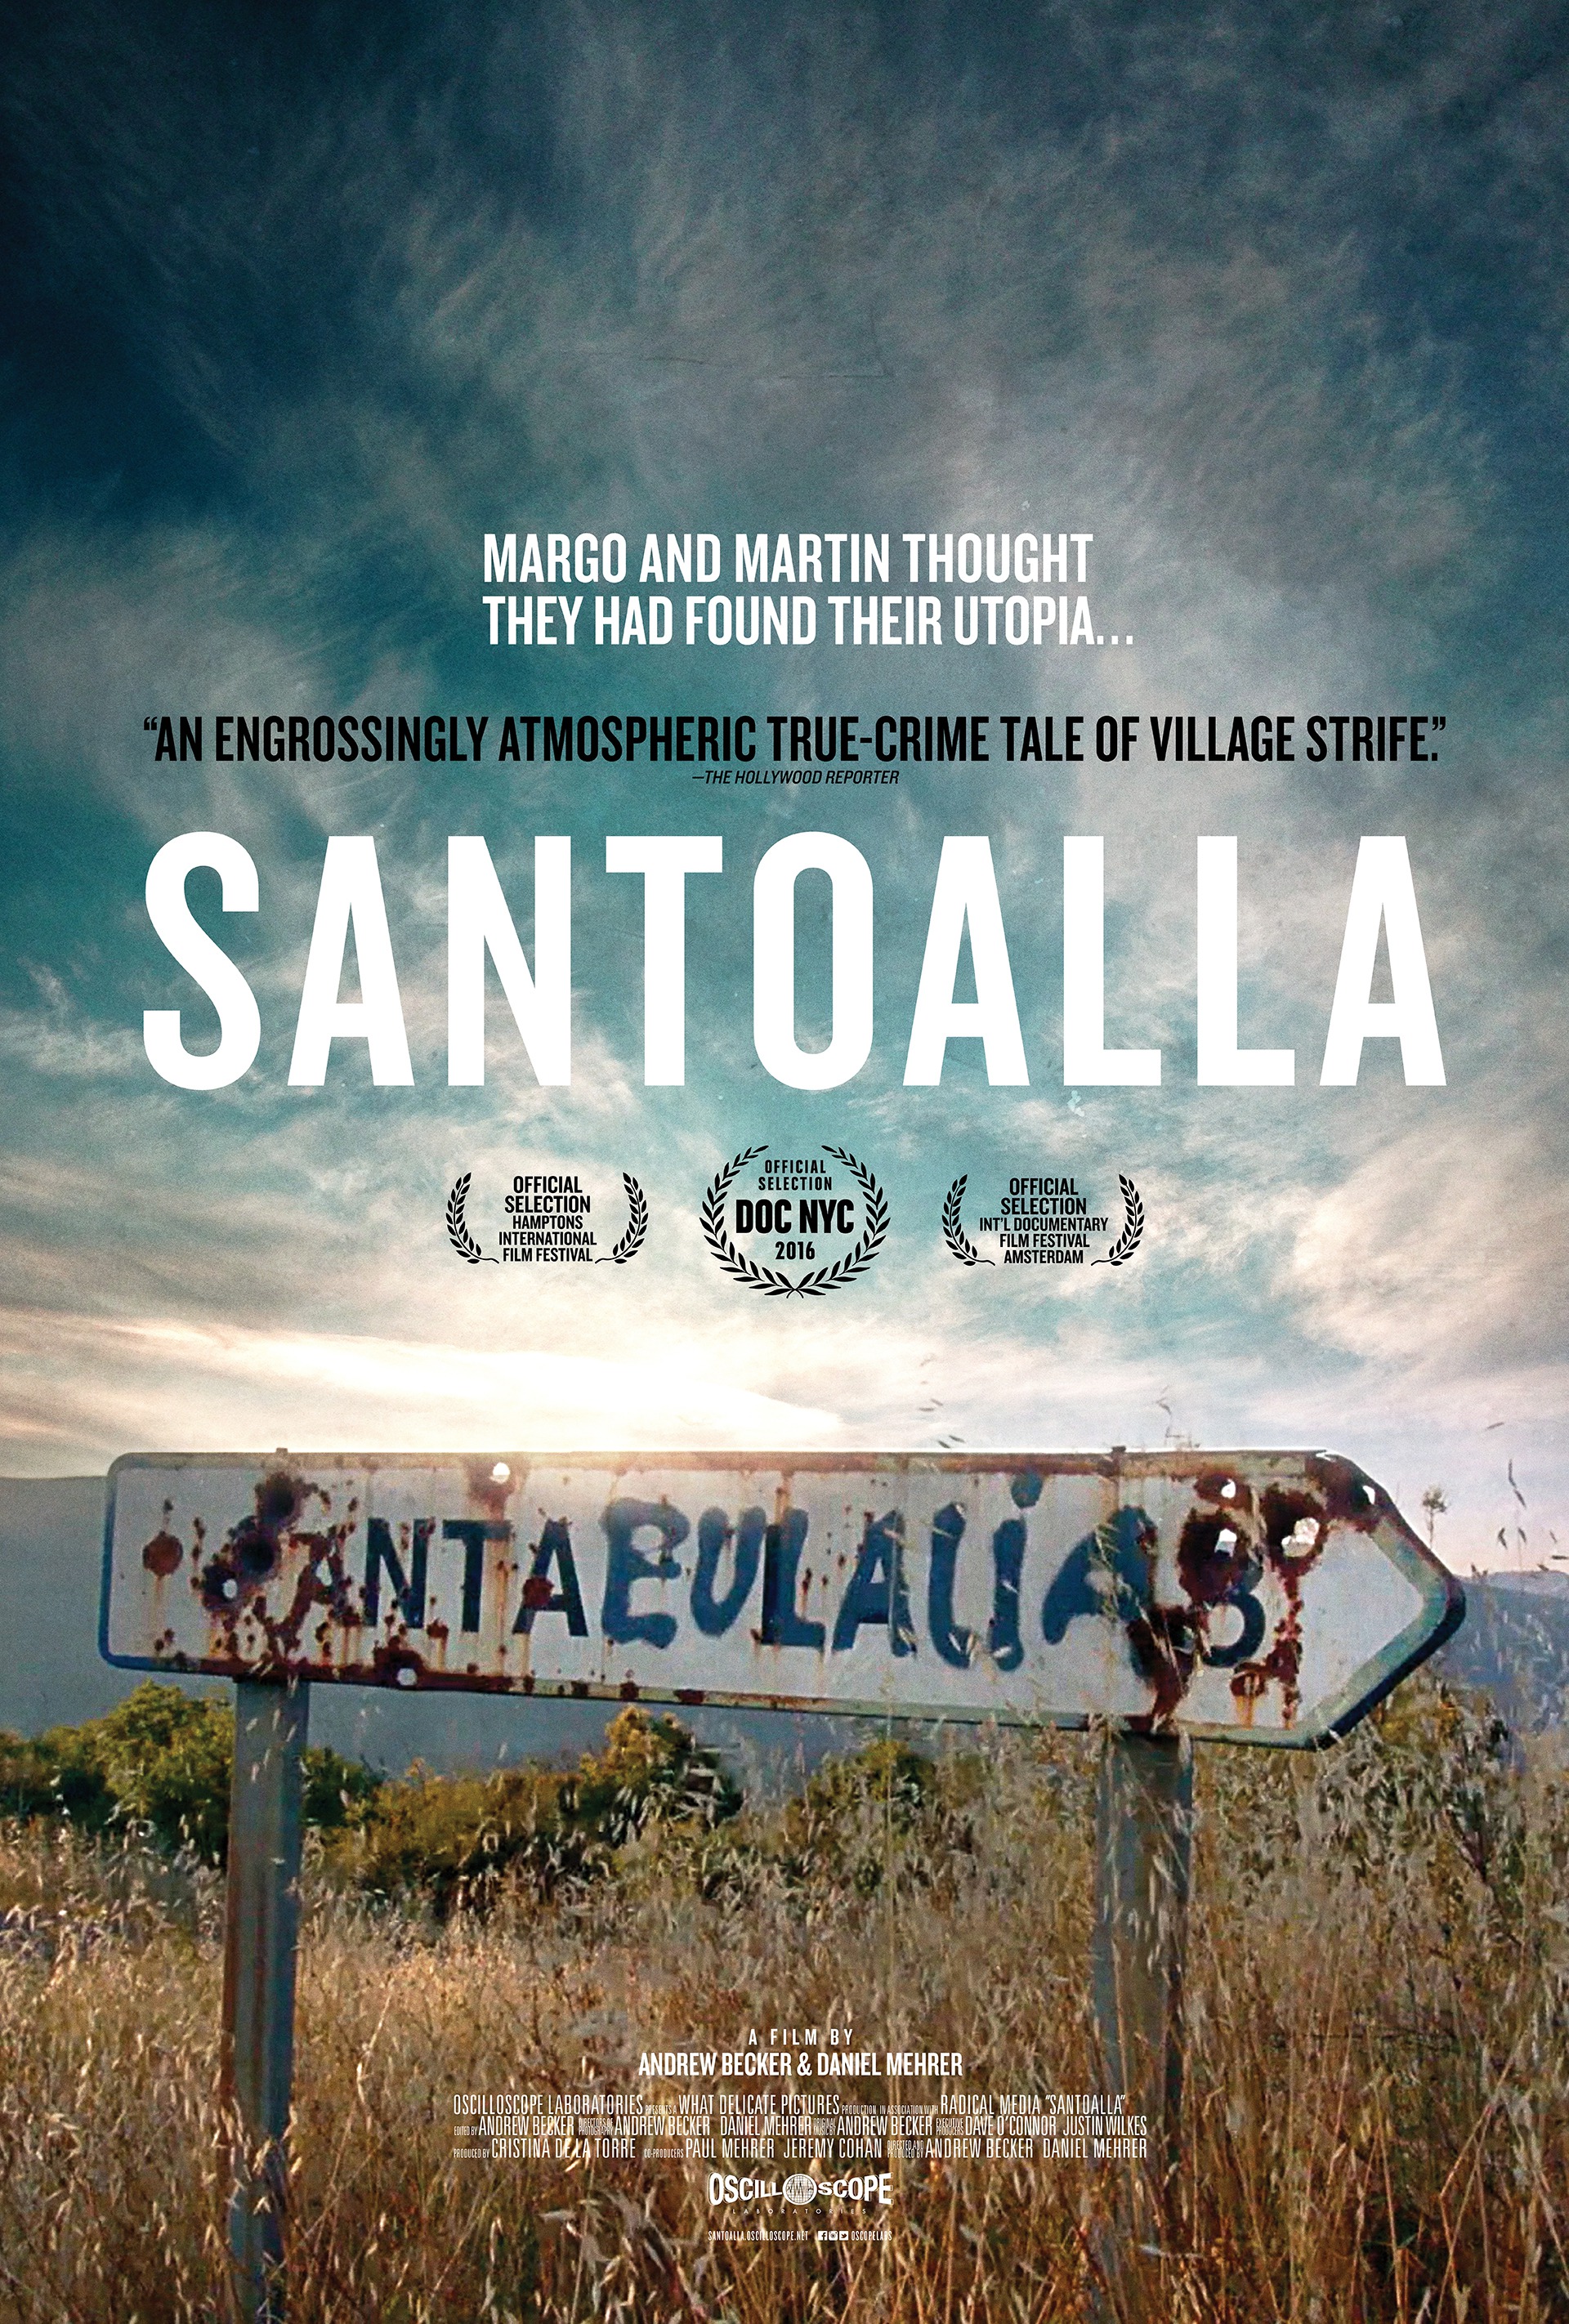 Mega Sized Movie Poster Image for Santoalla 